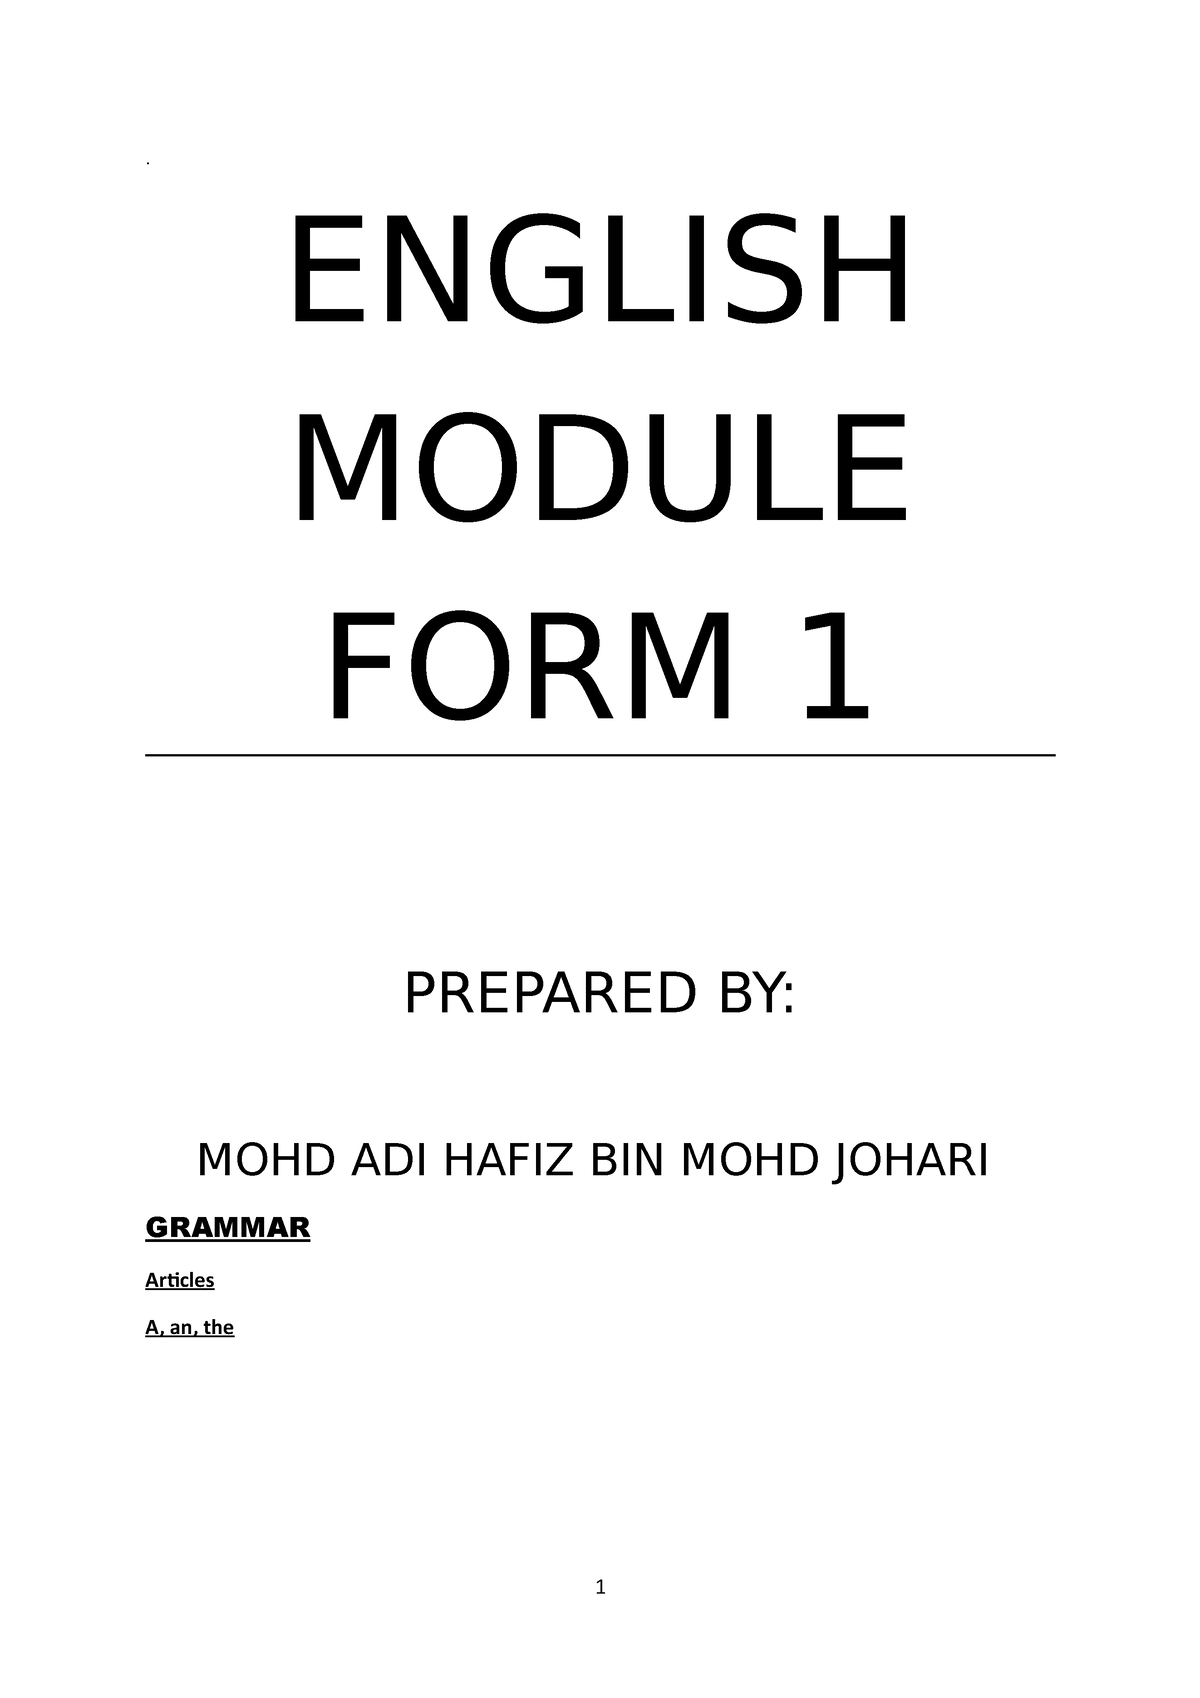 module-english-form-1-english-module-form-1-prepared-by-mohd-adi